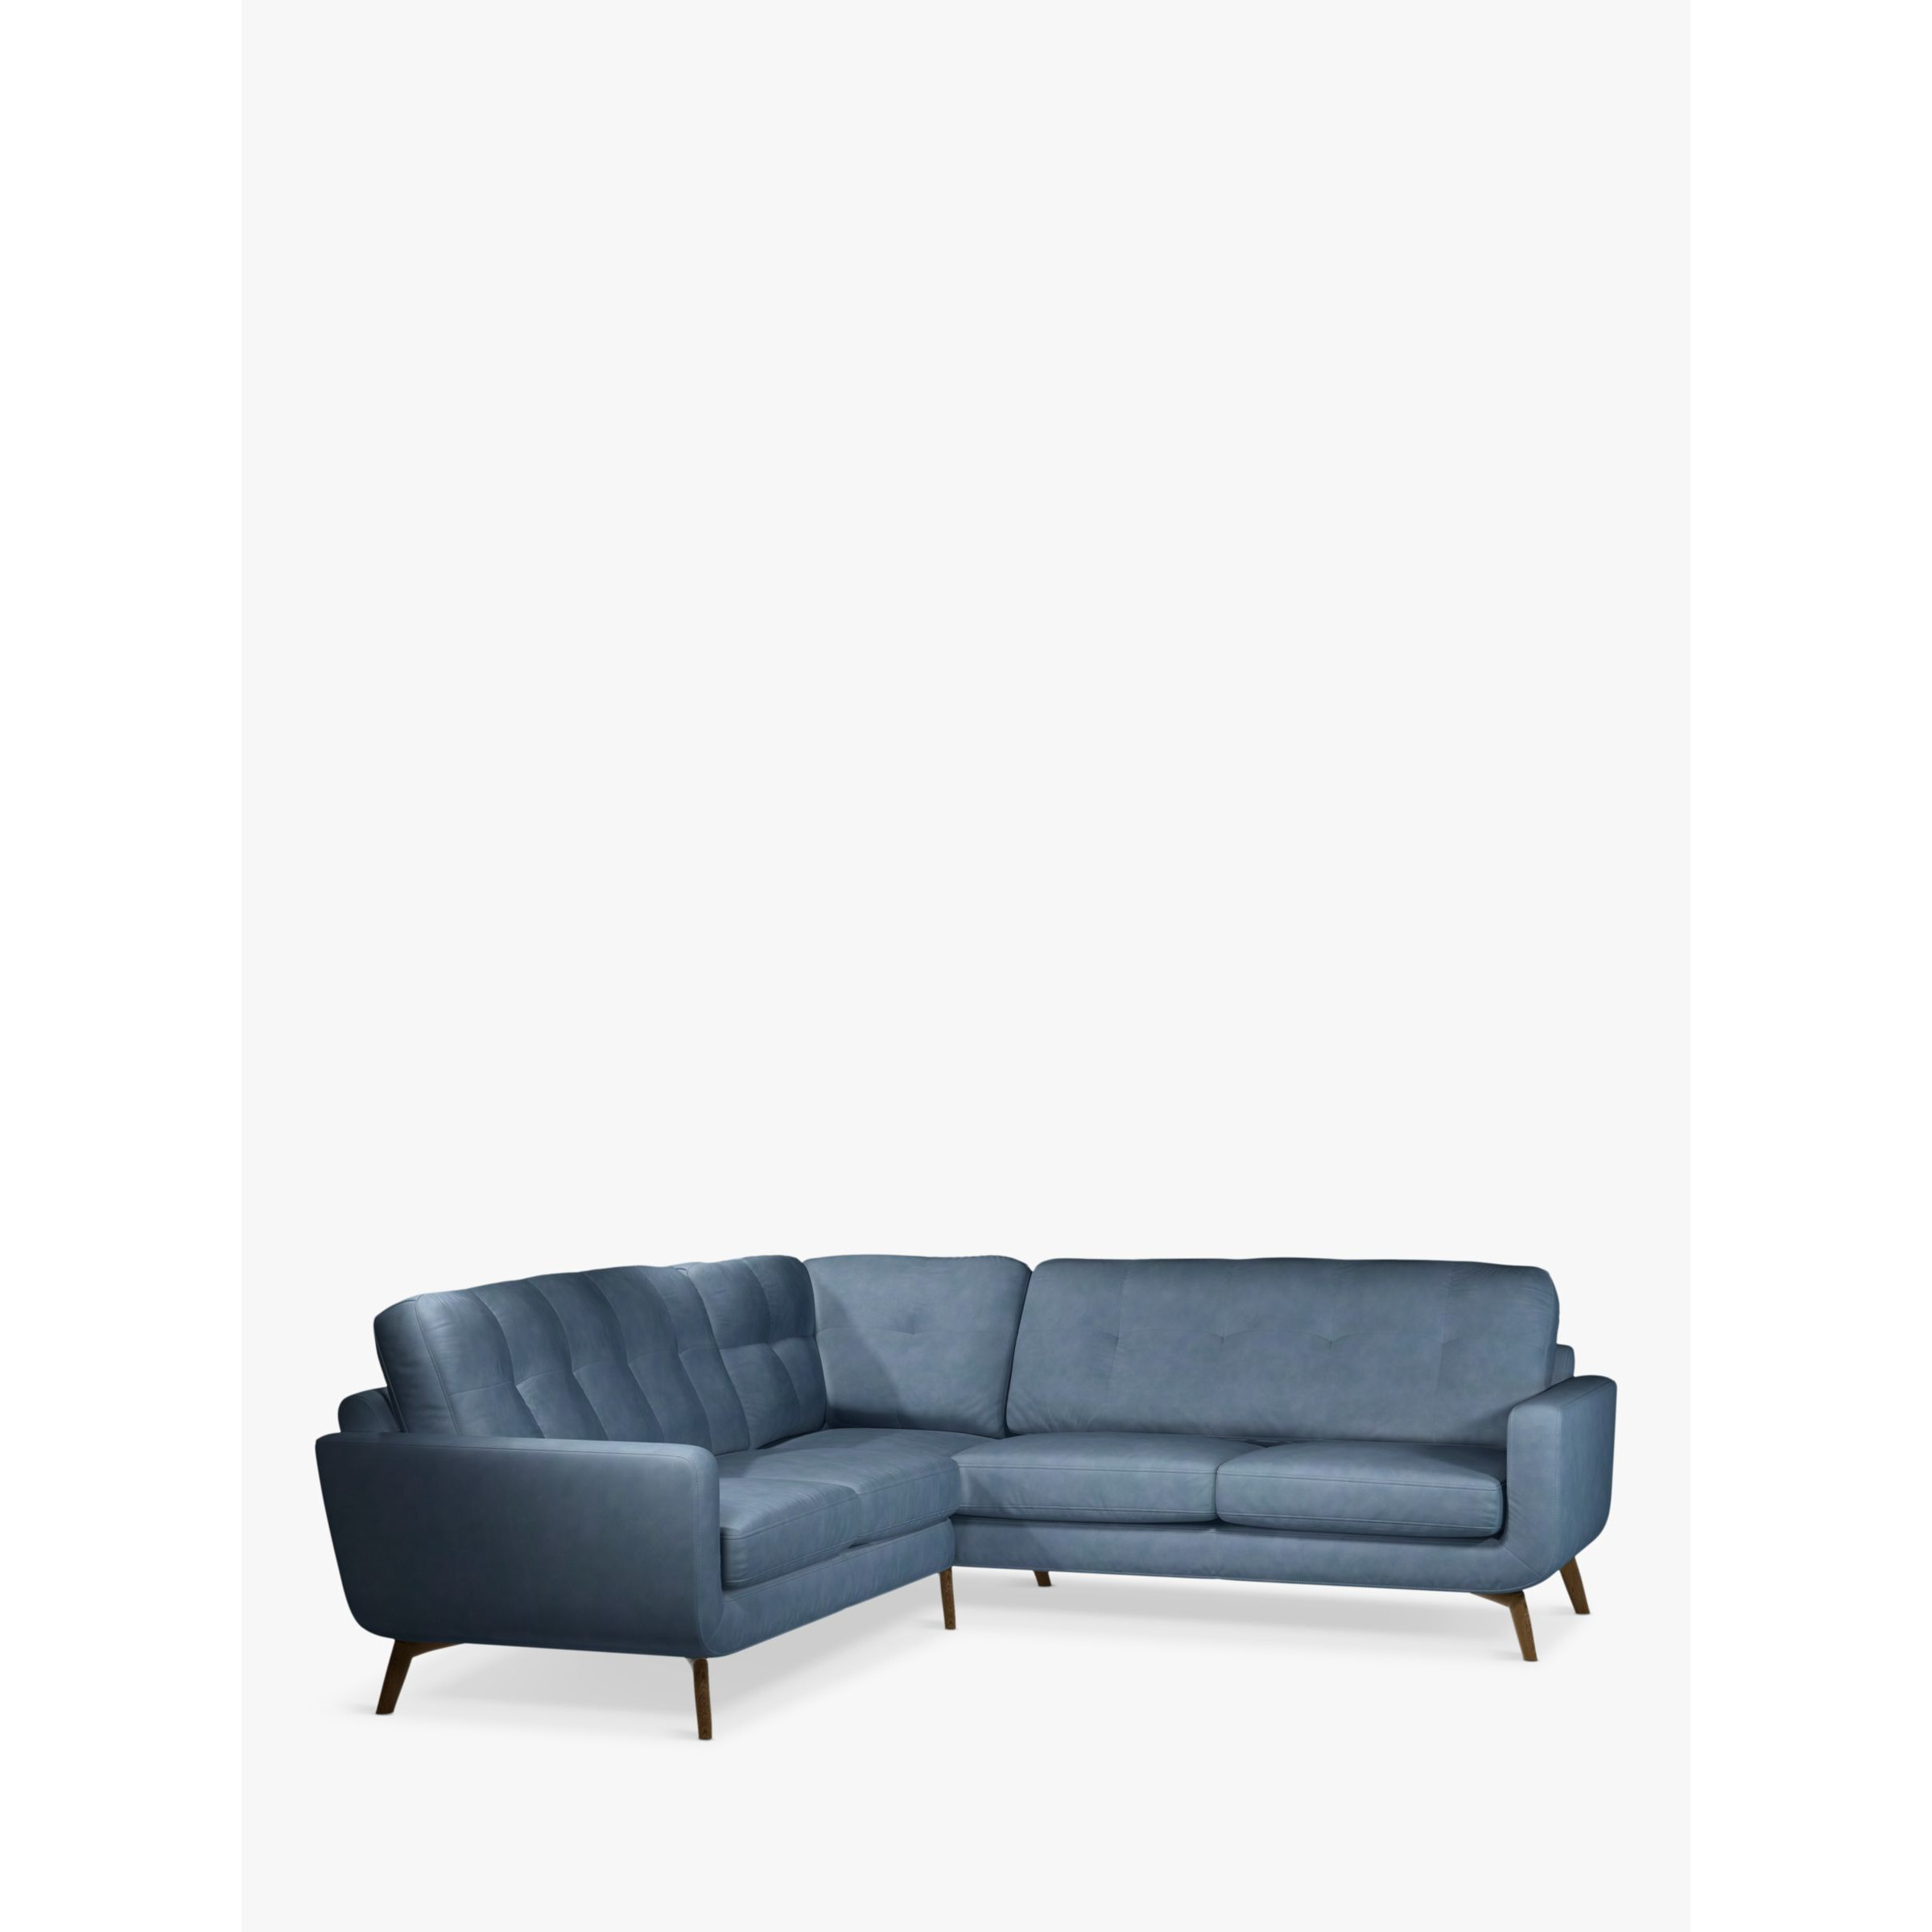 John Lewis Barbican 5+ Seater Leather Corner Sofa, Dark Leg - image 1